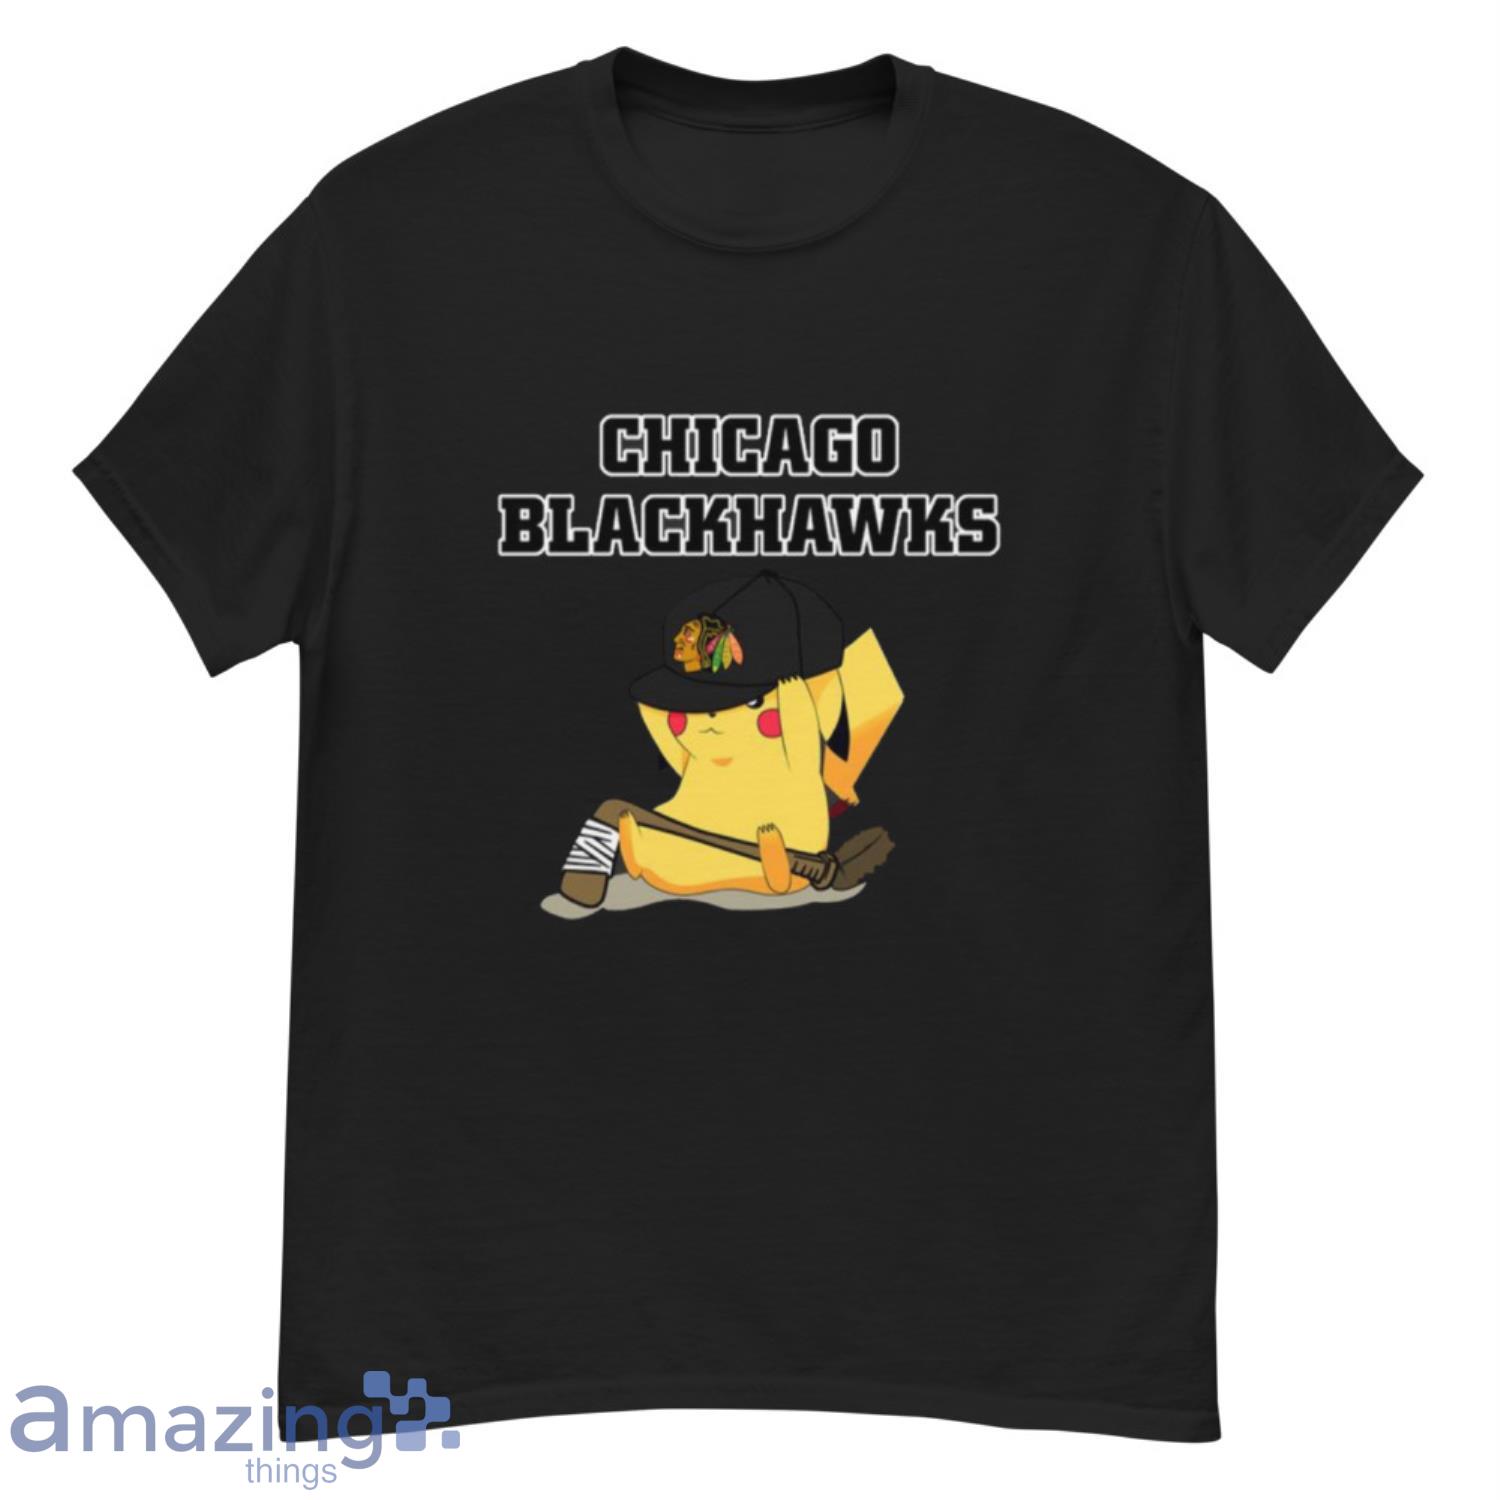 Buy the Men's NHL Chicago Blackhawks Long Sleeve Shirt Sz. S